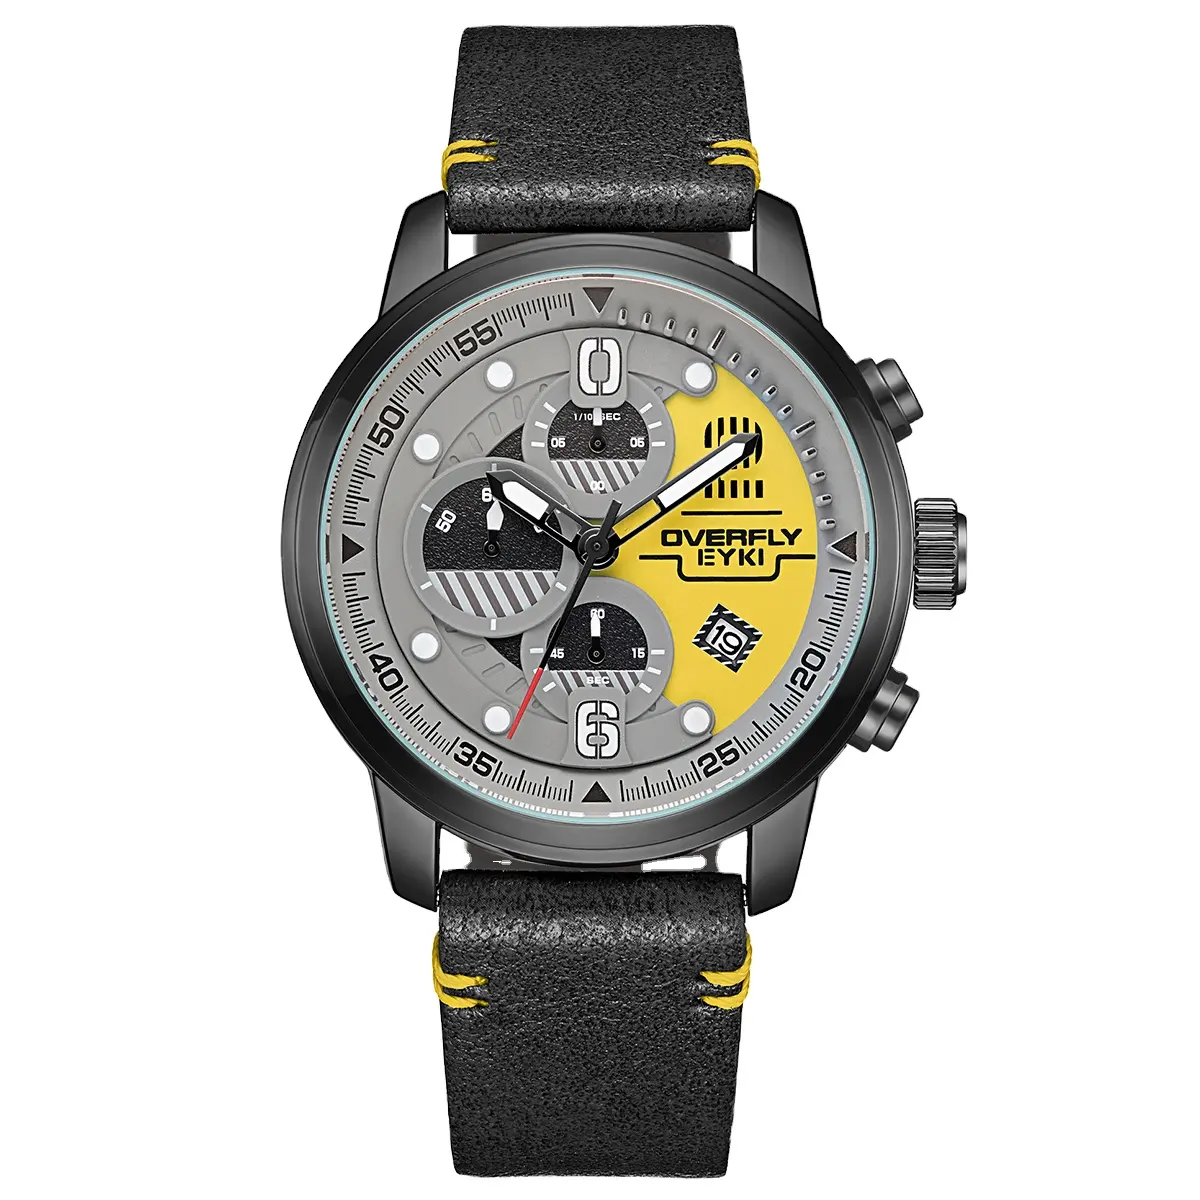 China watch manufacturers chronograph fashion waterproof quartz wrist watches